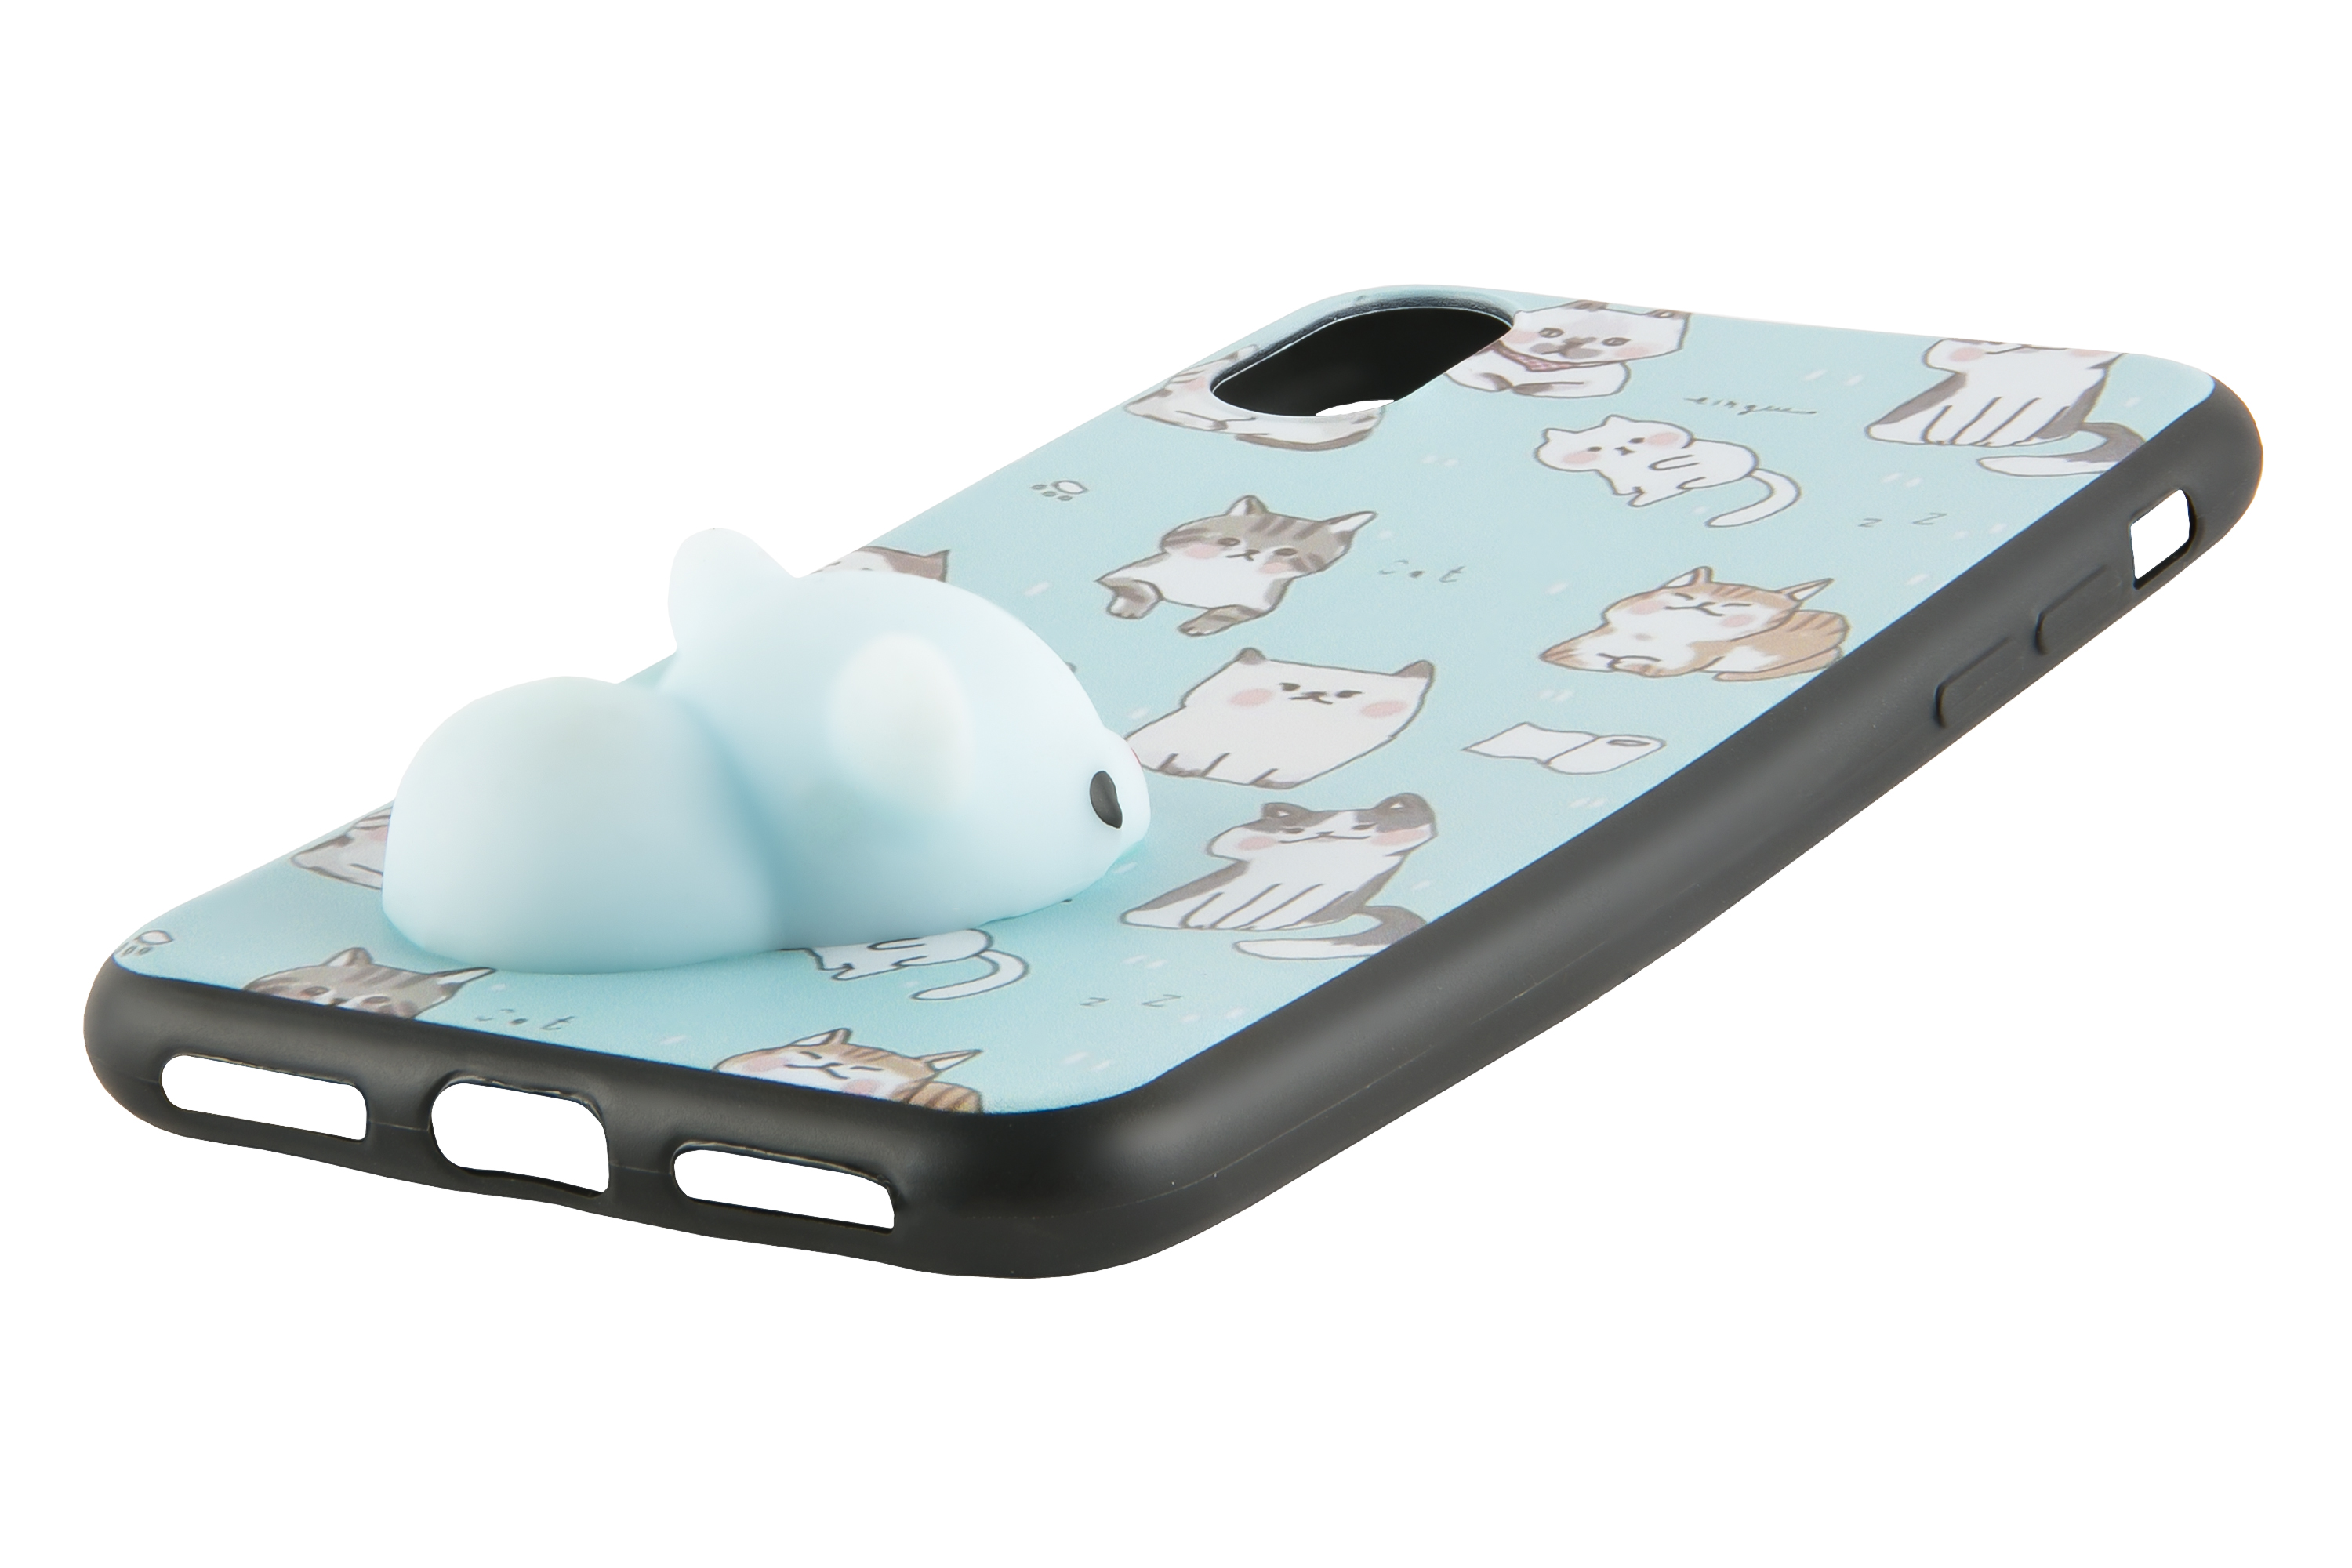 Накладка силикон iBox Crystal Jelly Case для Apple iPhone X, дизайн №1